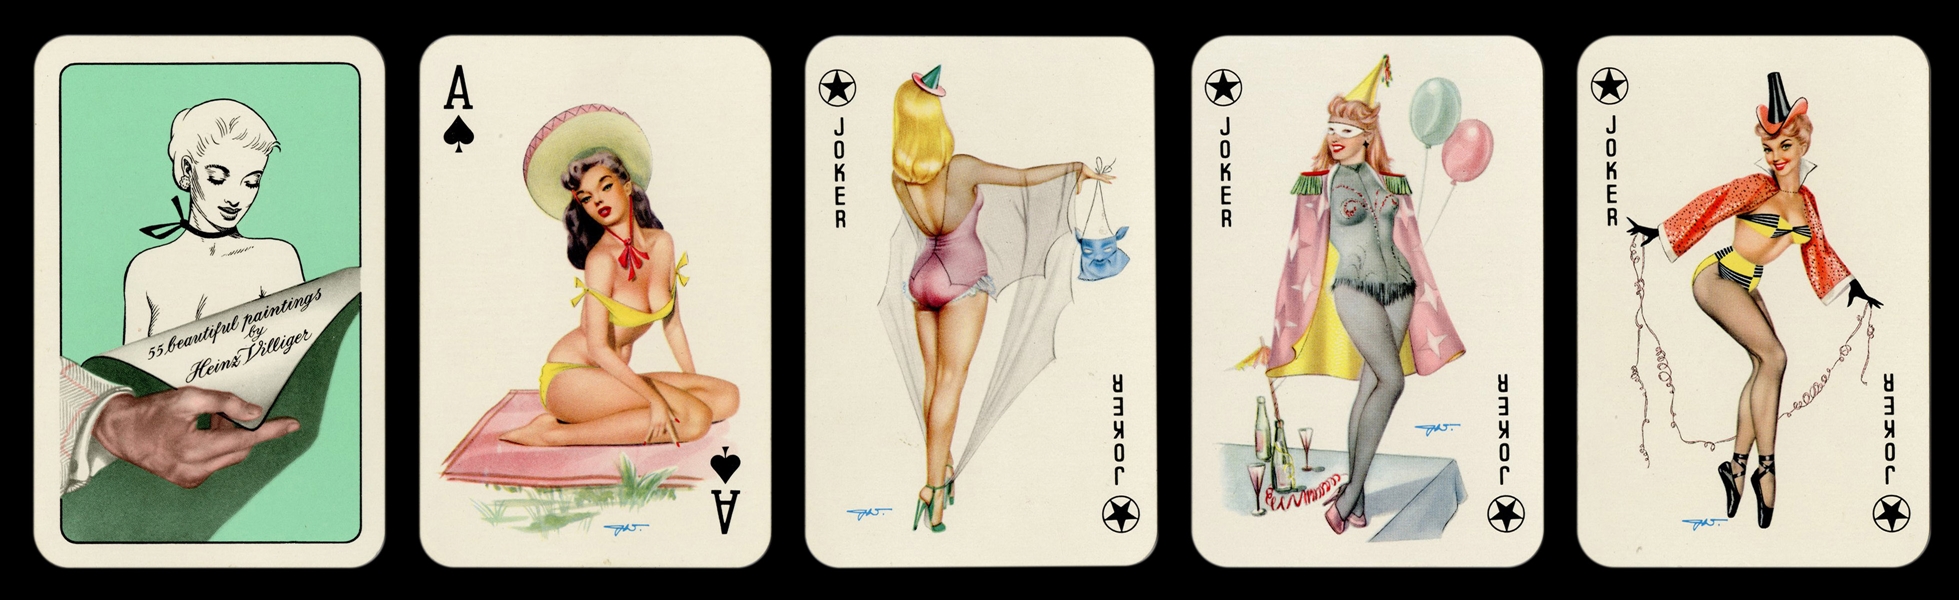  Joker “Darling” Pin-Up Playing Cards. Germany, ca. 1950s. 5...